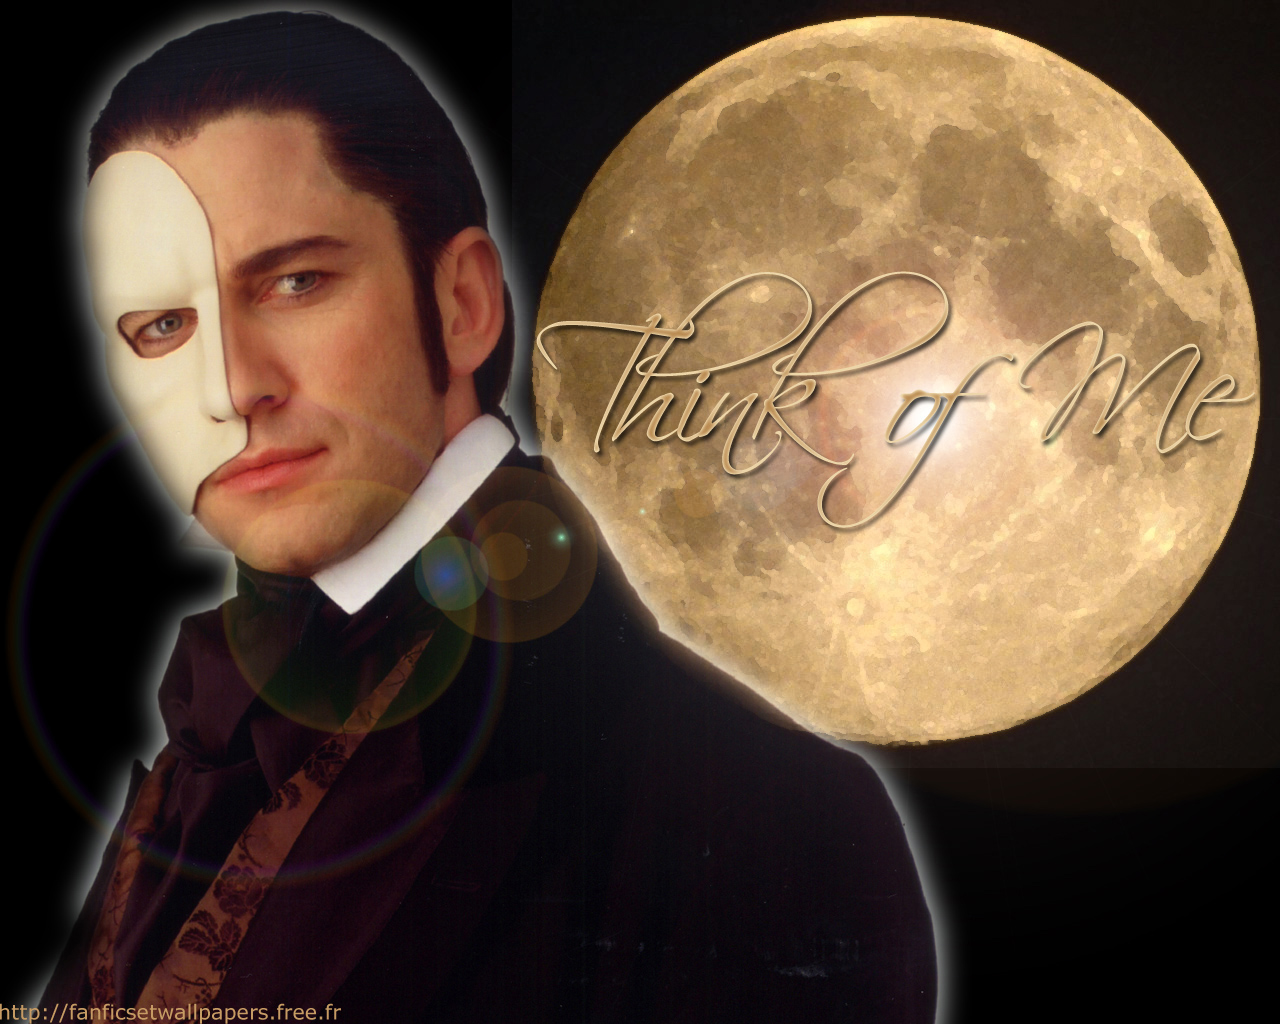 phantom of the opera 2004 wallpaper